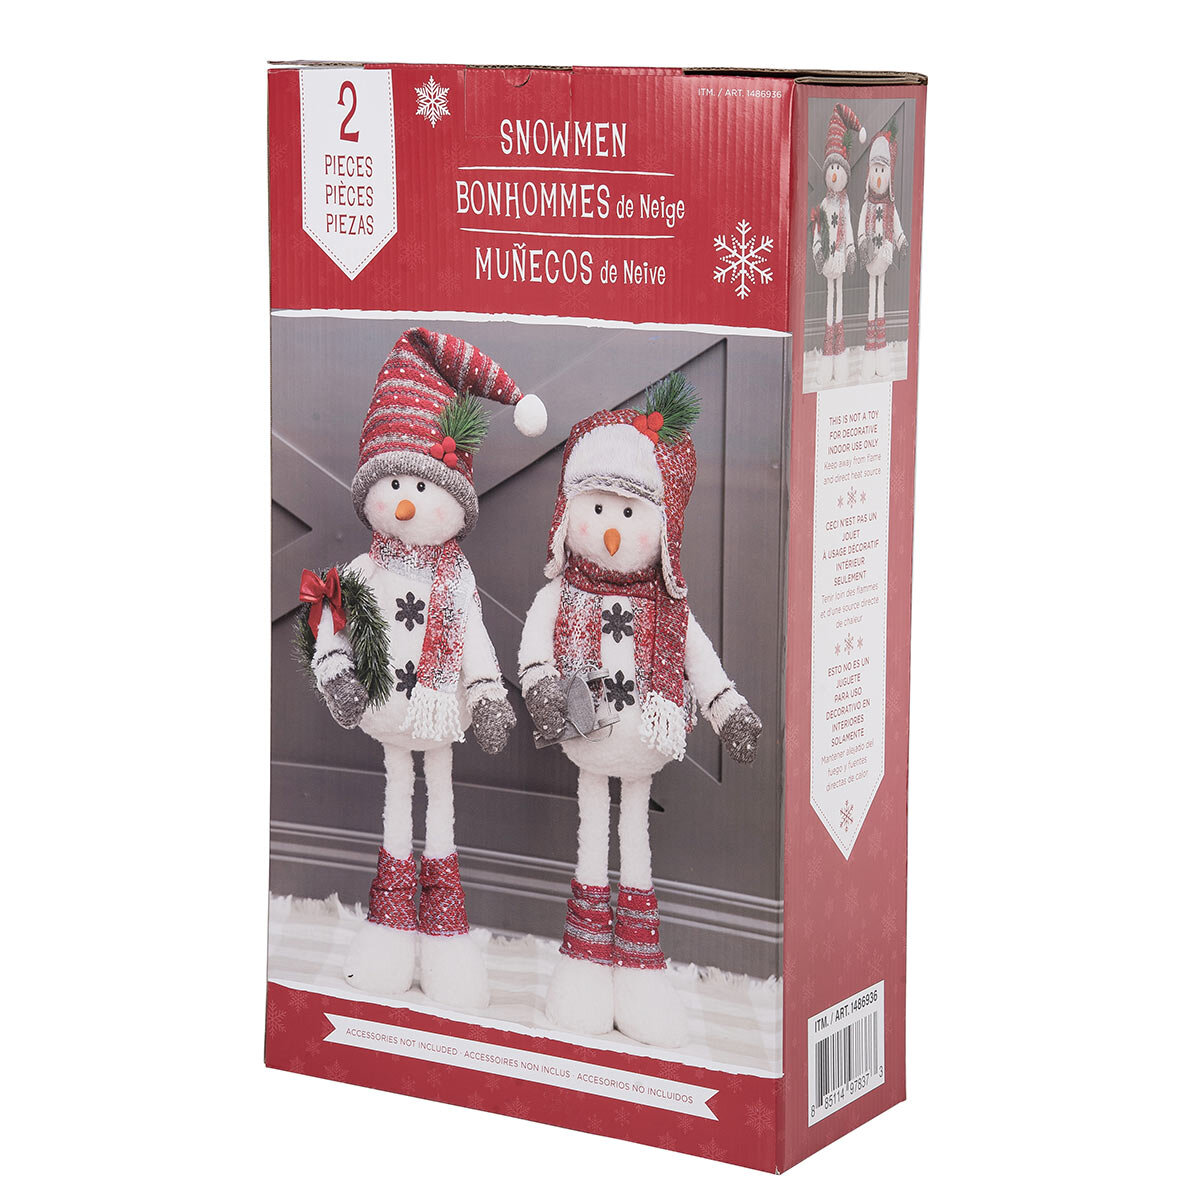 Buy Plush Snowmen Box Image at Costco.co.uk